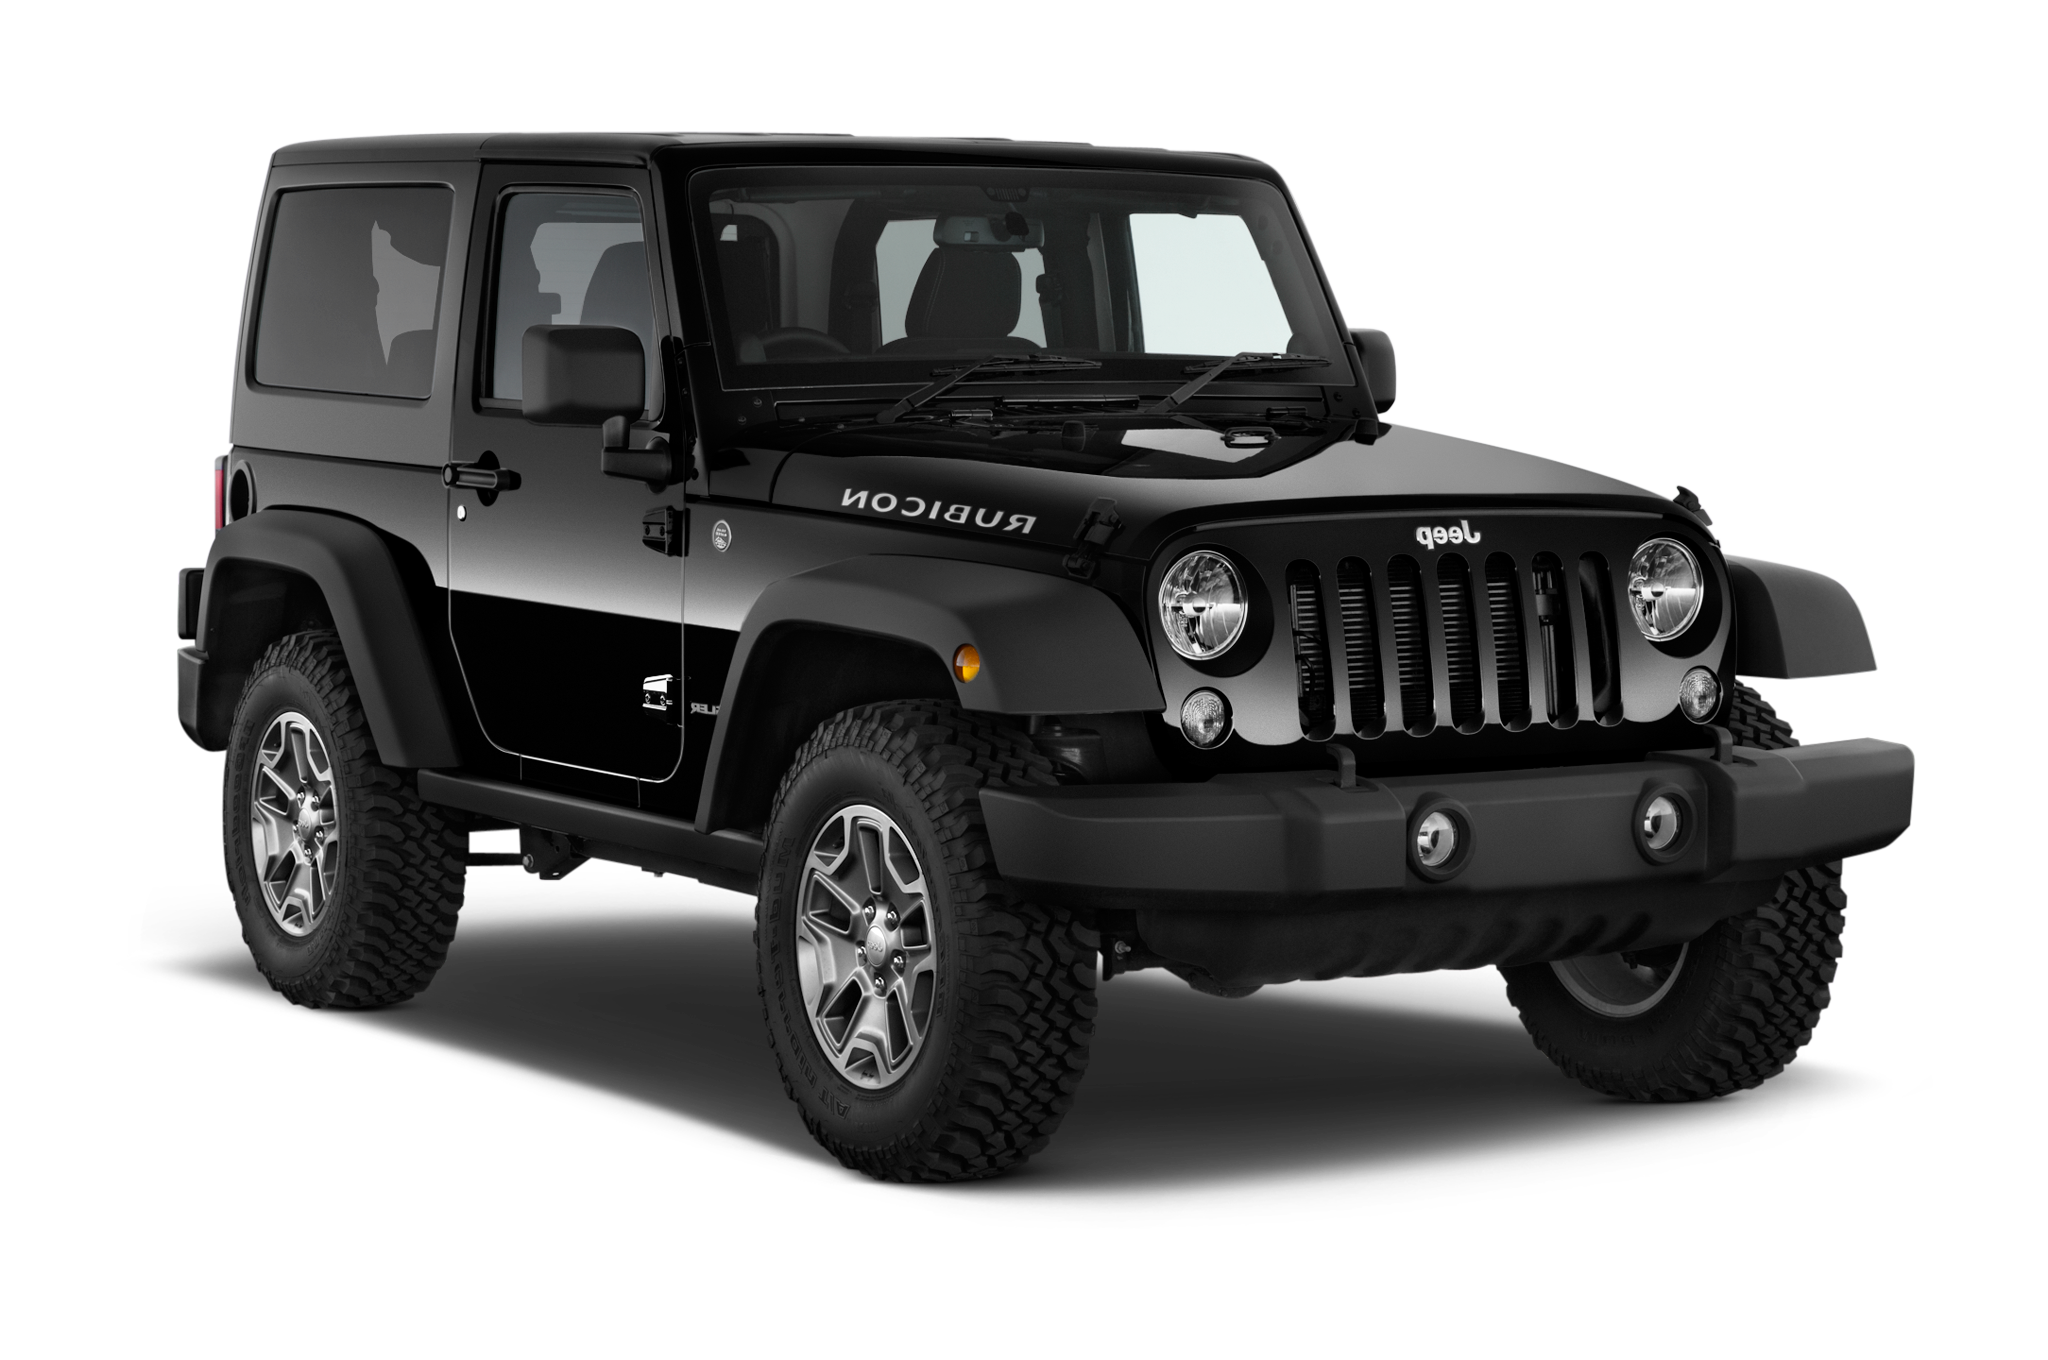 new jeep wrangler lease offers best price near boston #22785